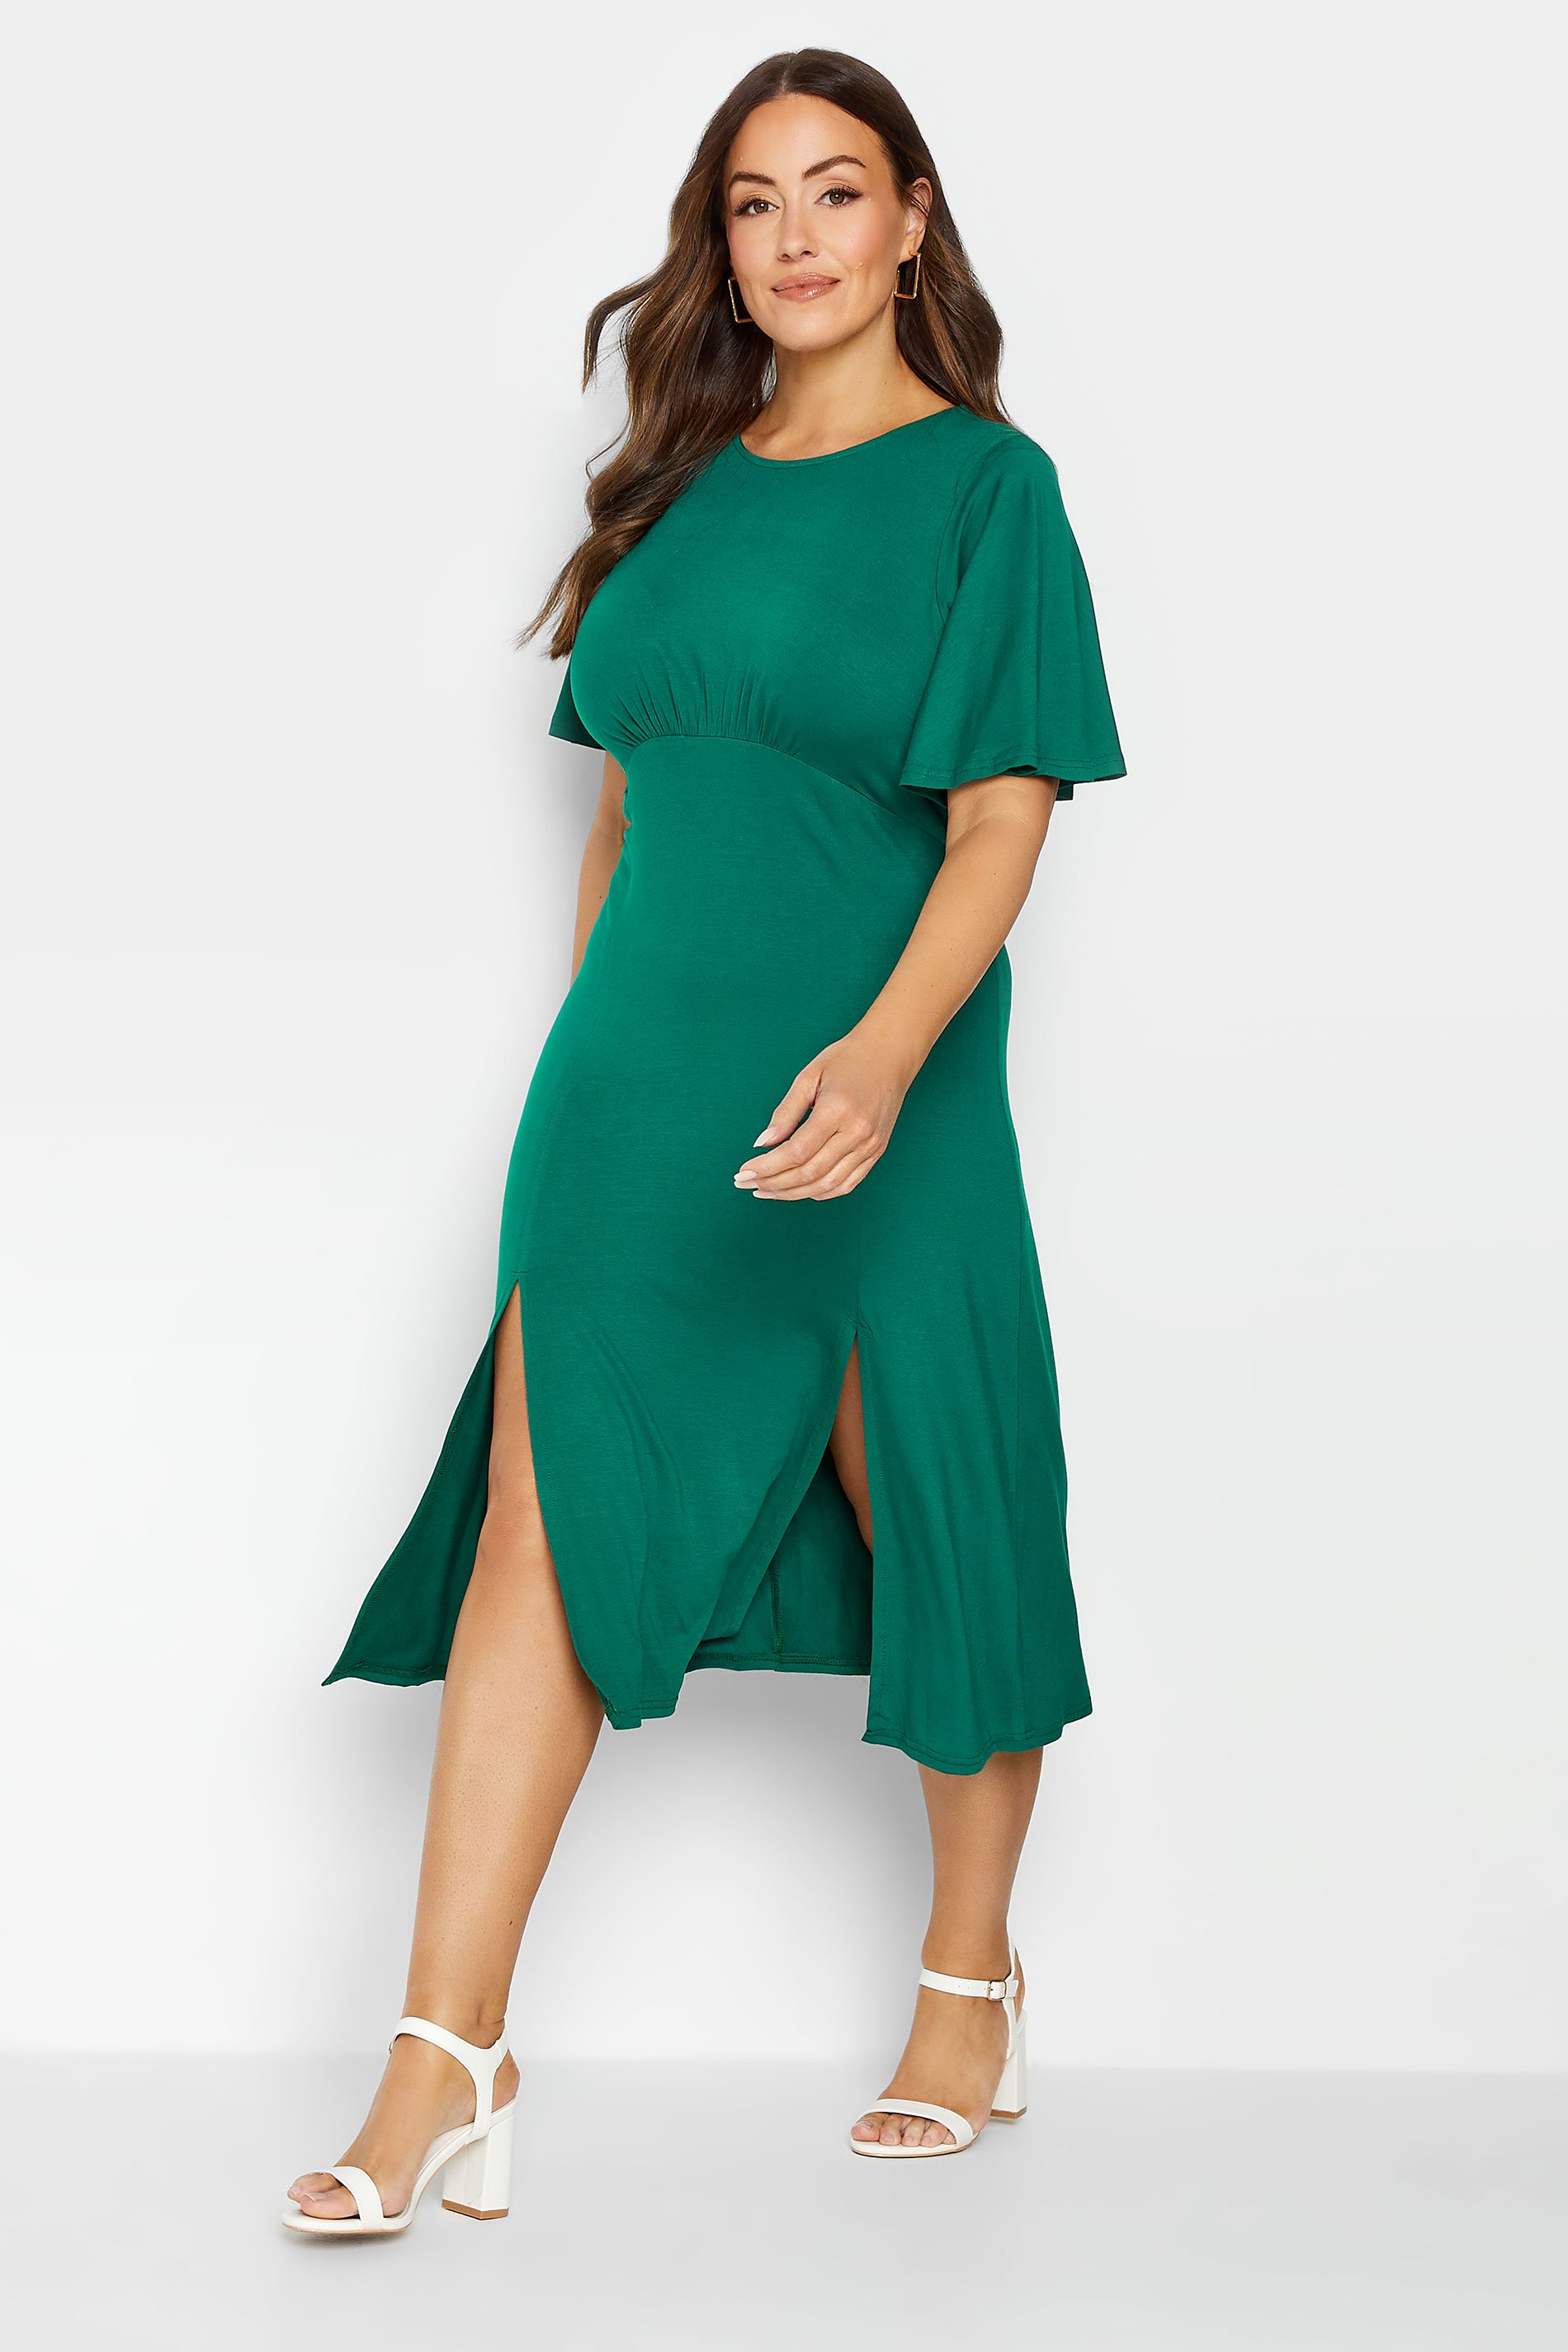 M&Co Forest Green Angel Sleeve Split Hem Midi Dress | M&Co 1